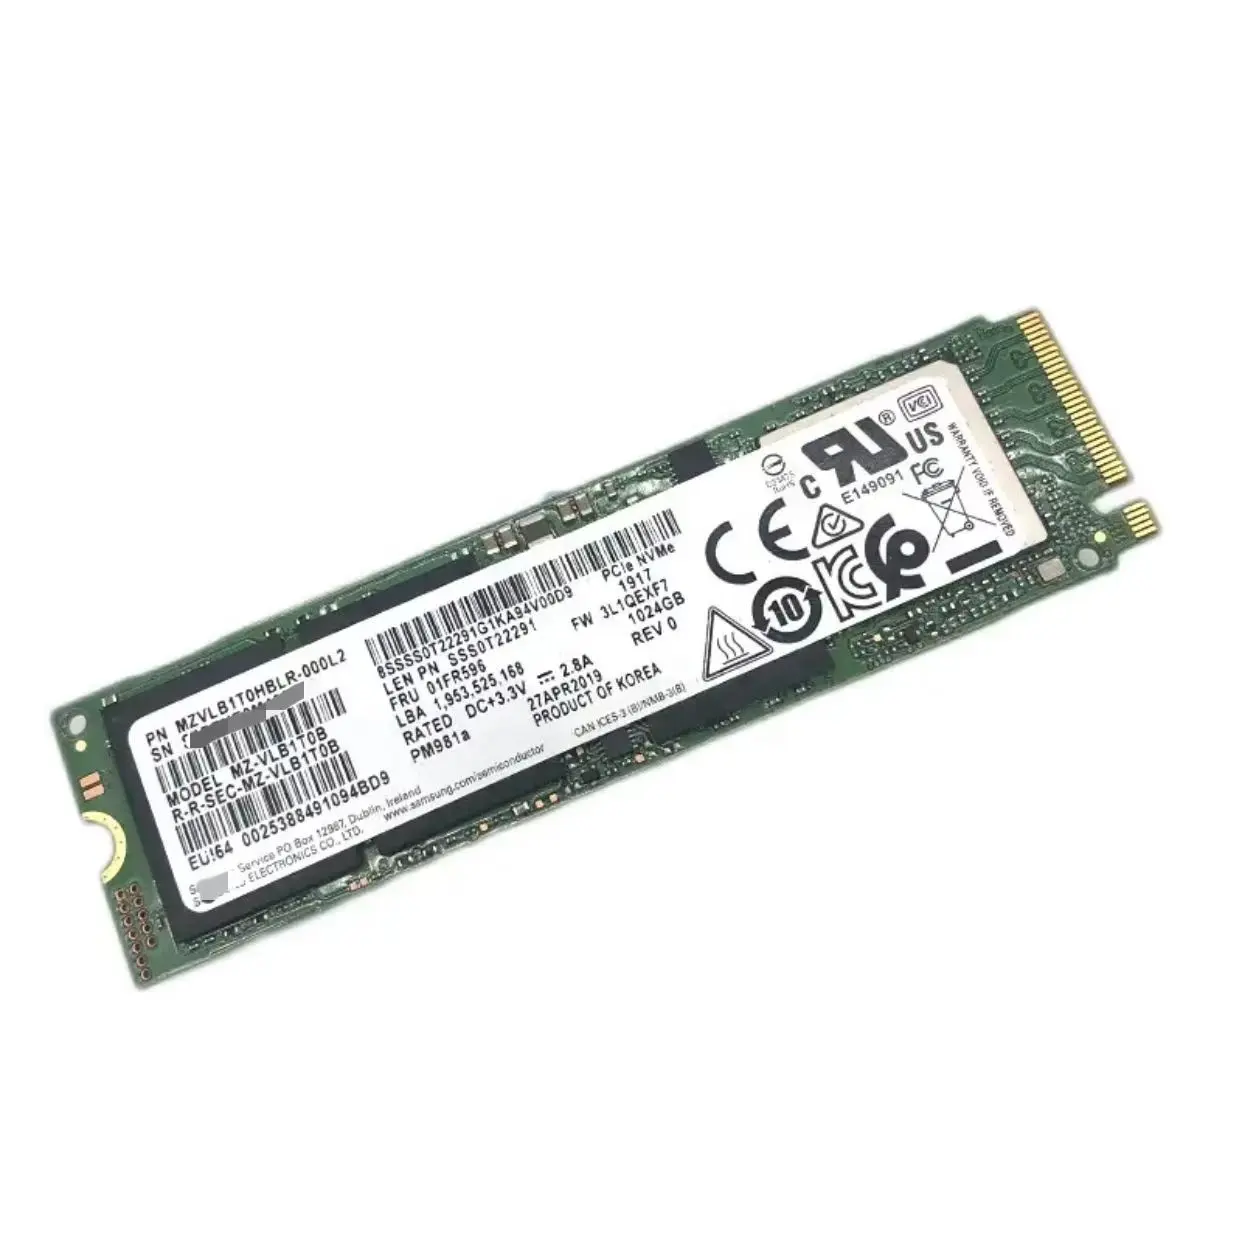 PM981A 256GB SSD 2.5" M.2 SSD MZVLB256HBHQ-00000 256GB SSD M.2-2280 PCIe NVMe Solid State Drive